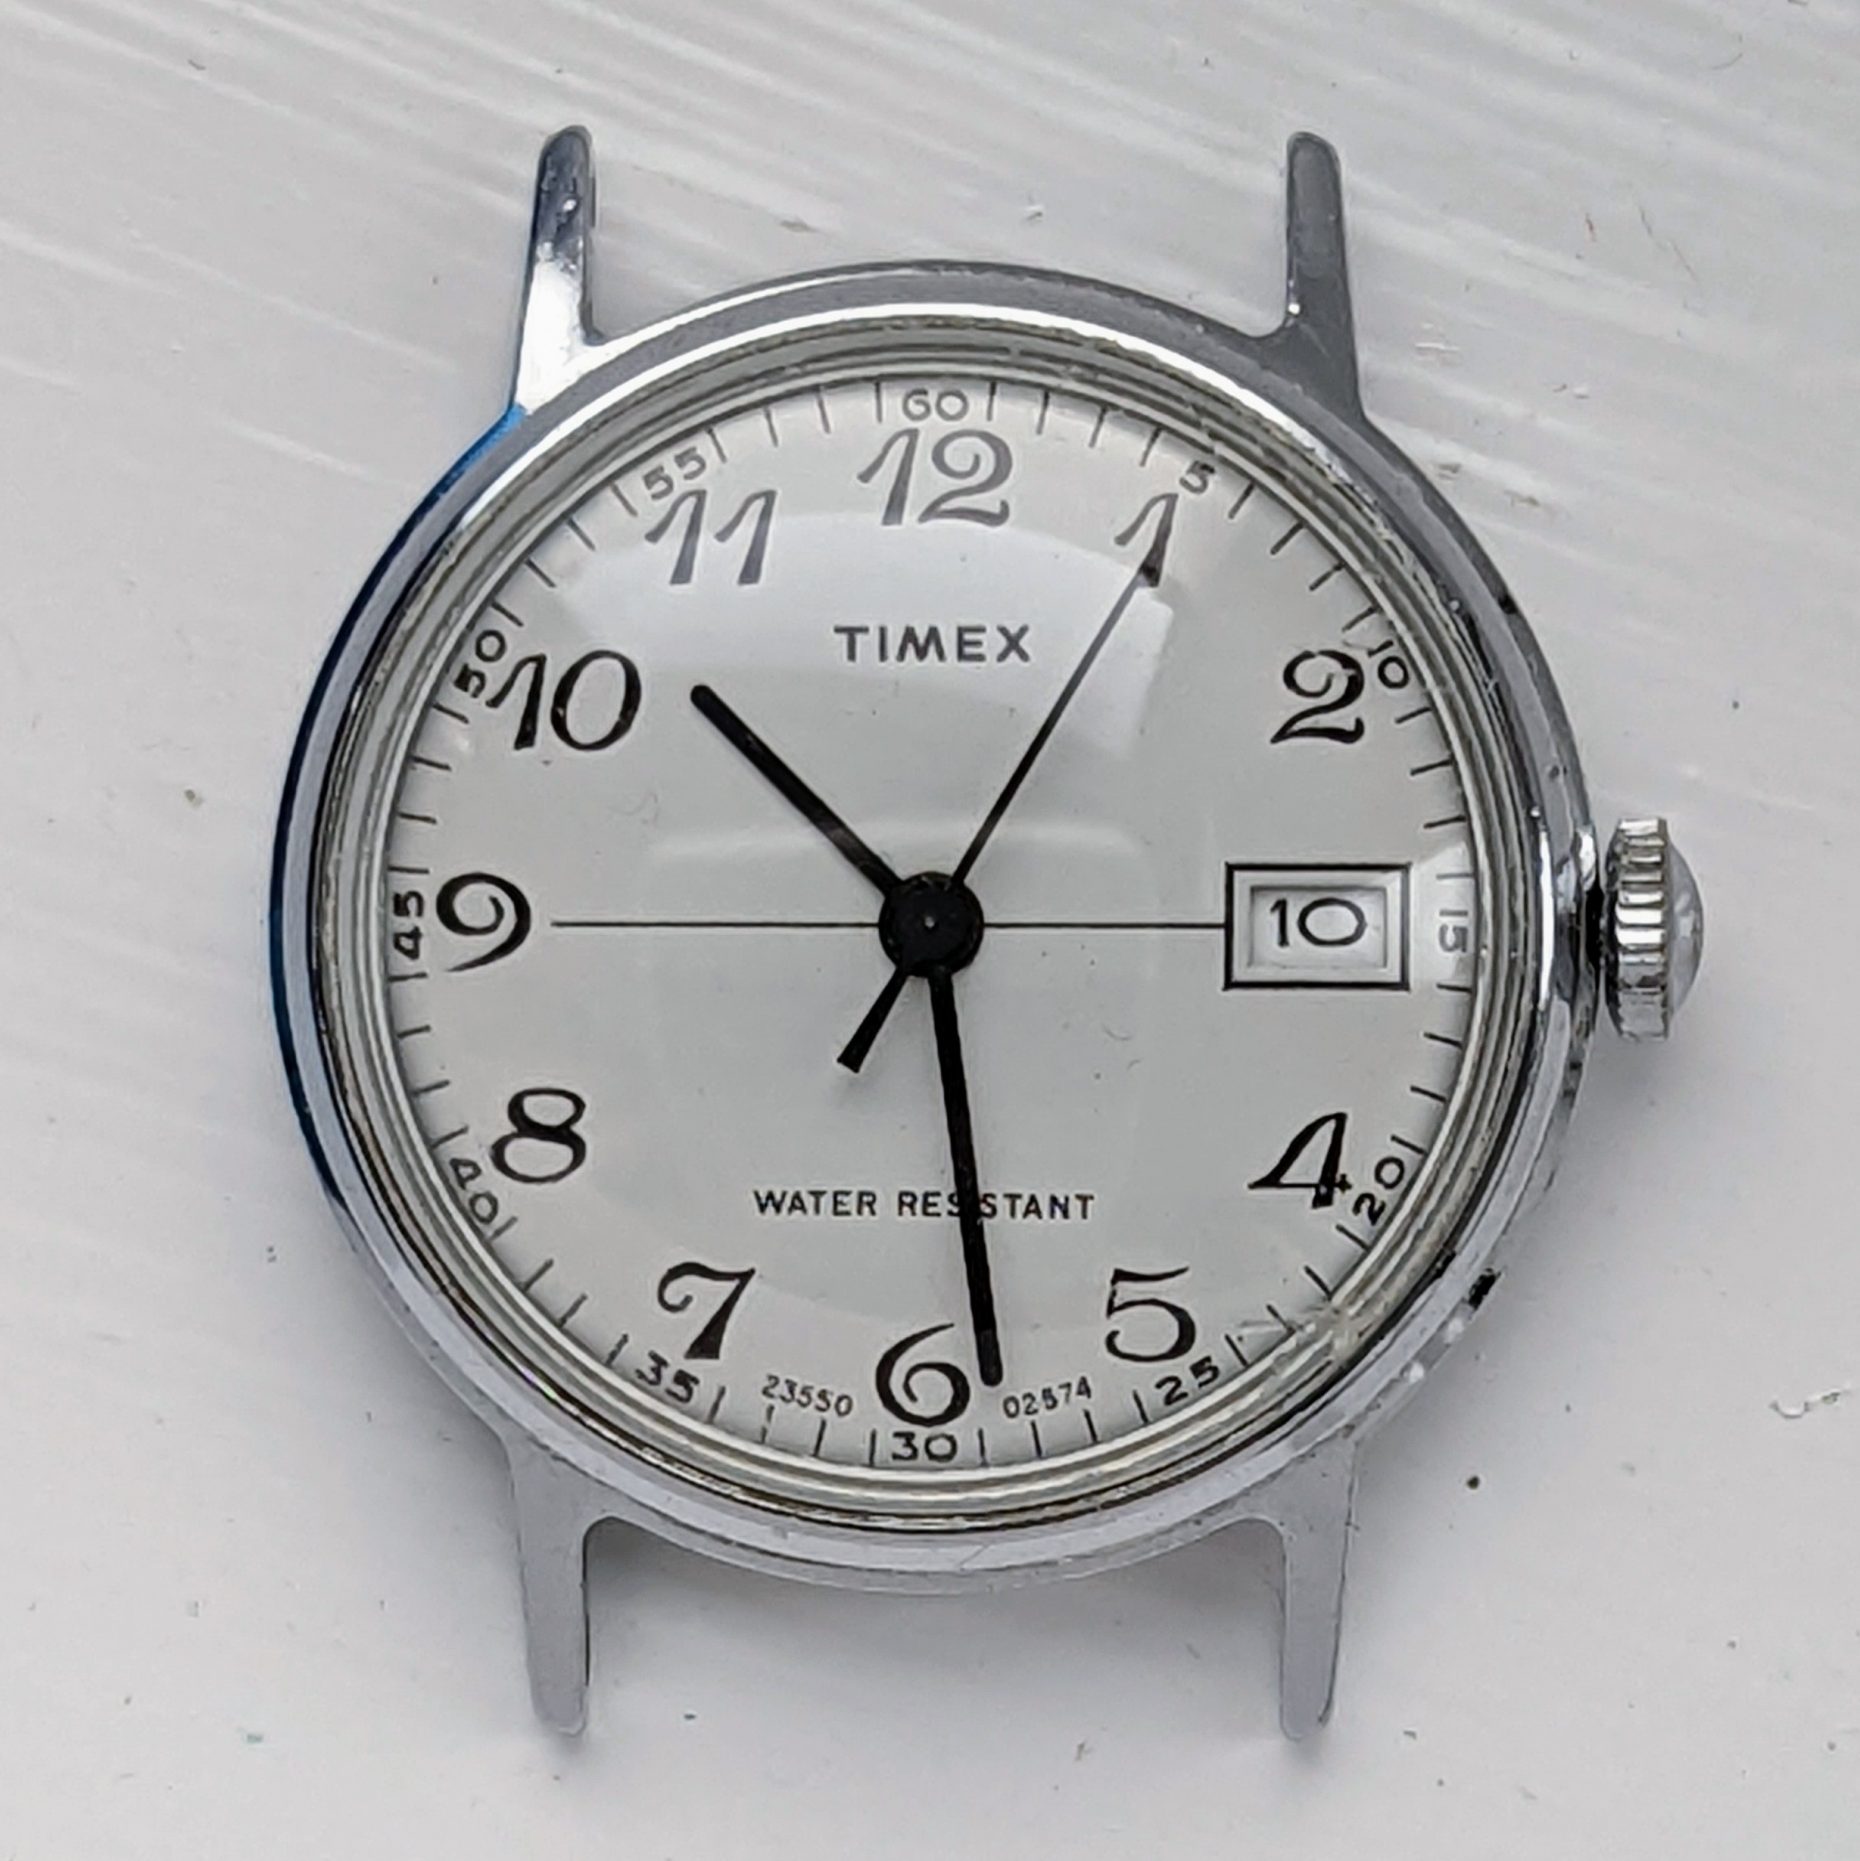 Timex Sprite 23550 02574 [1974]